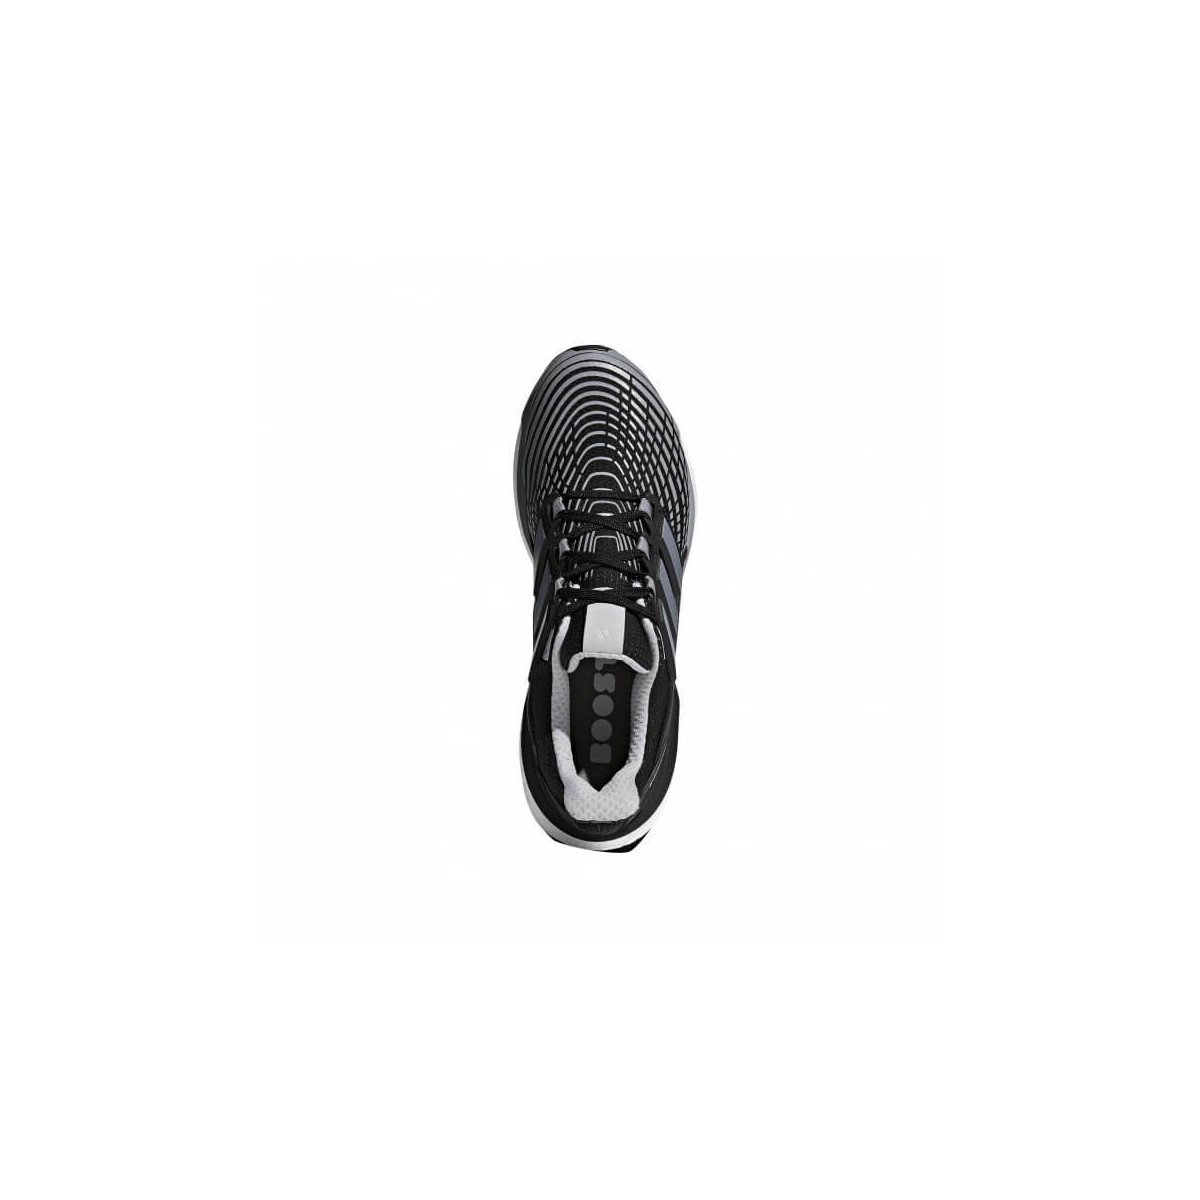 Miau miau sobresalir Reflexión Adidas Energy Boost 4 men's shoes SS18 color gray and black